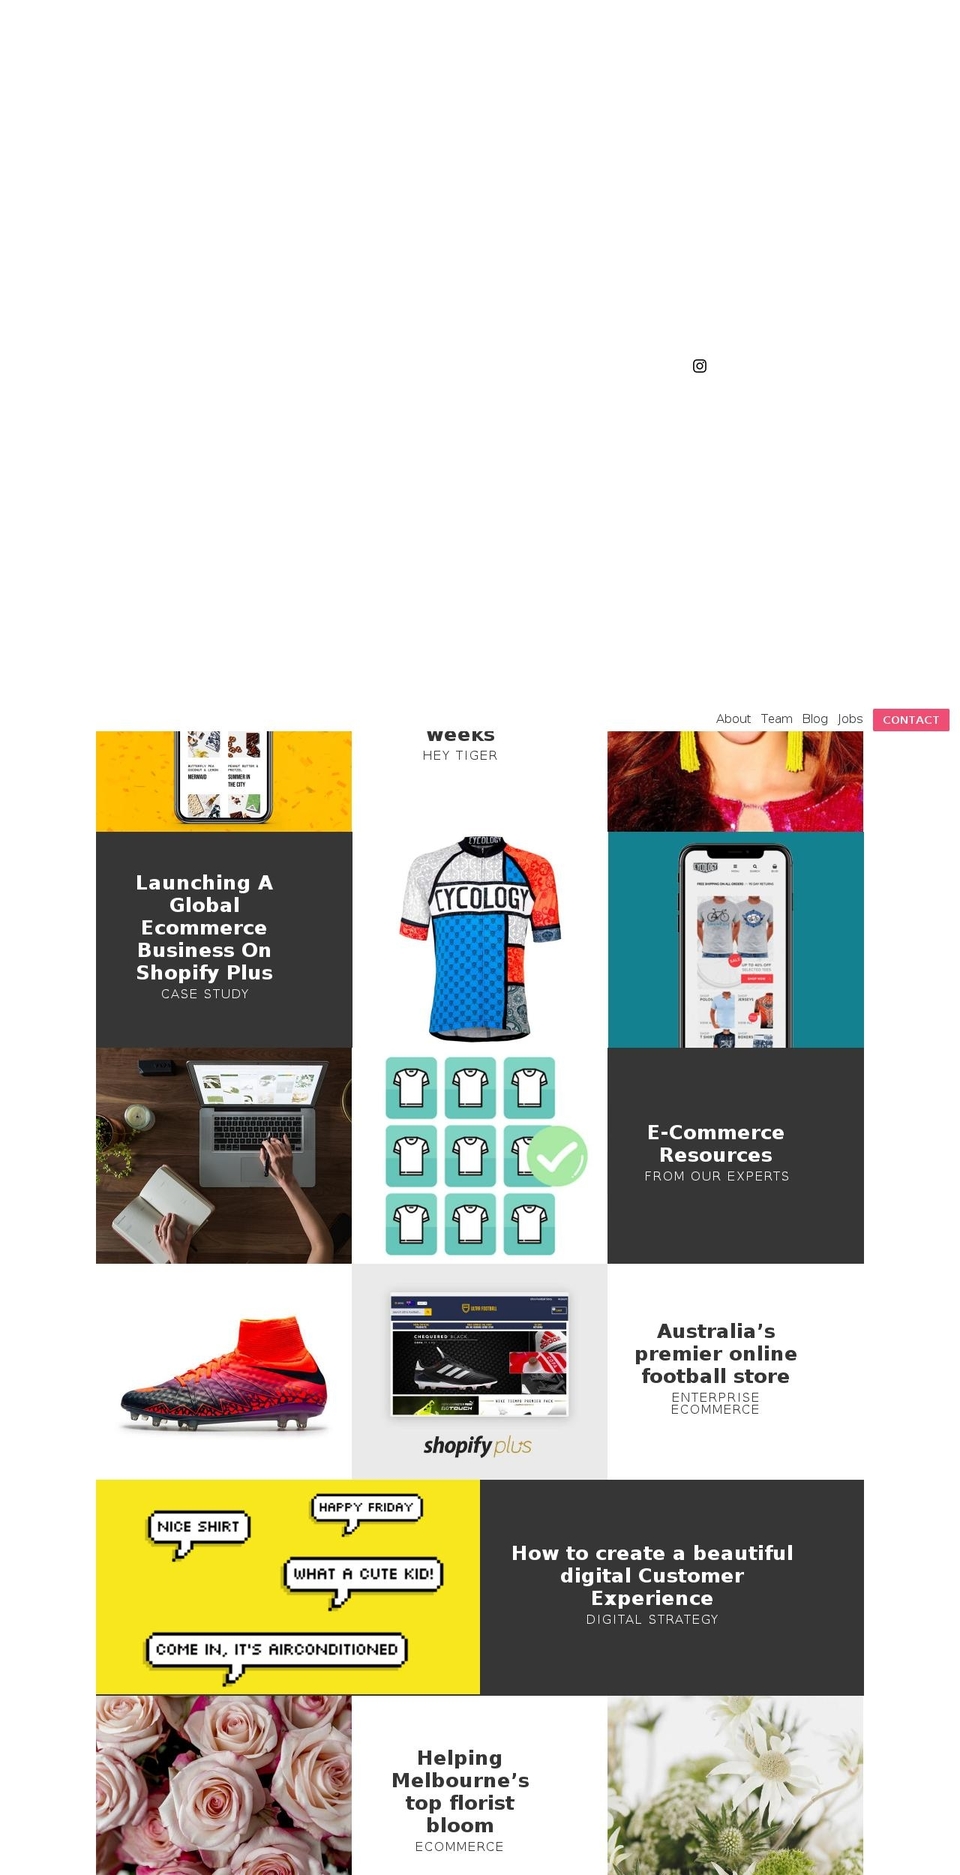 docommerce.com.au shopify website screenshot